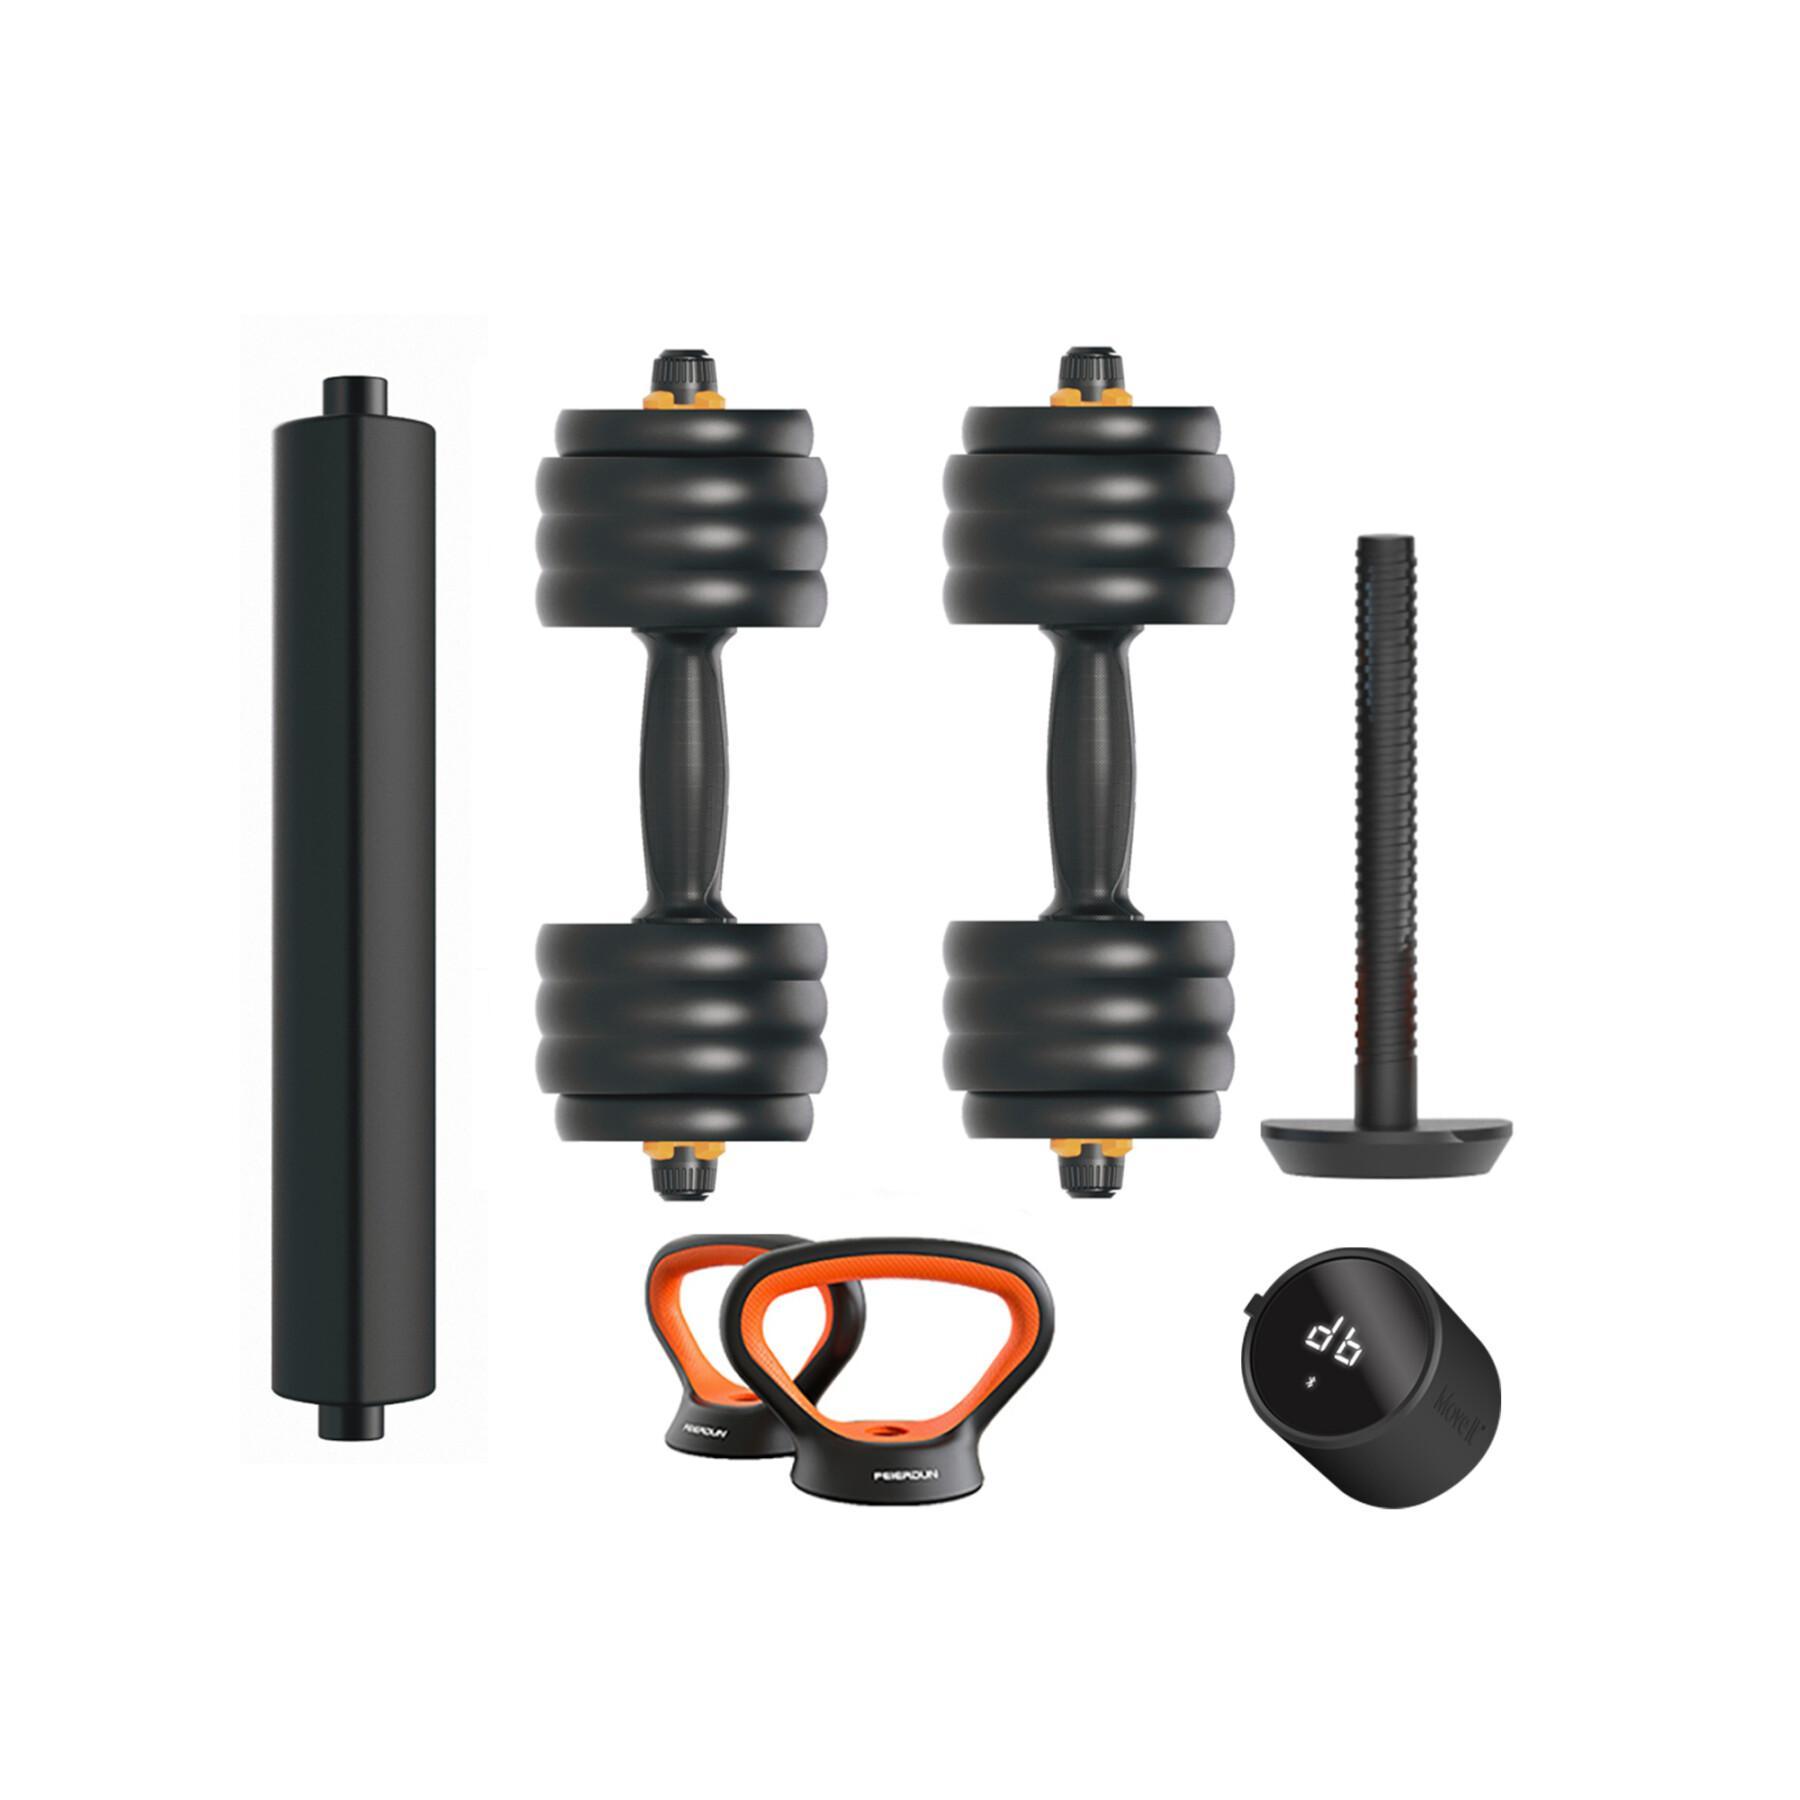 Mancuerna + barra + kettlebell + kit de sensores Xiaomi Fed V2 40kg